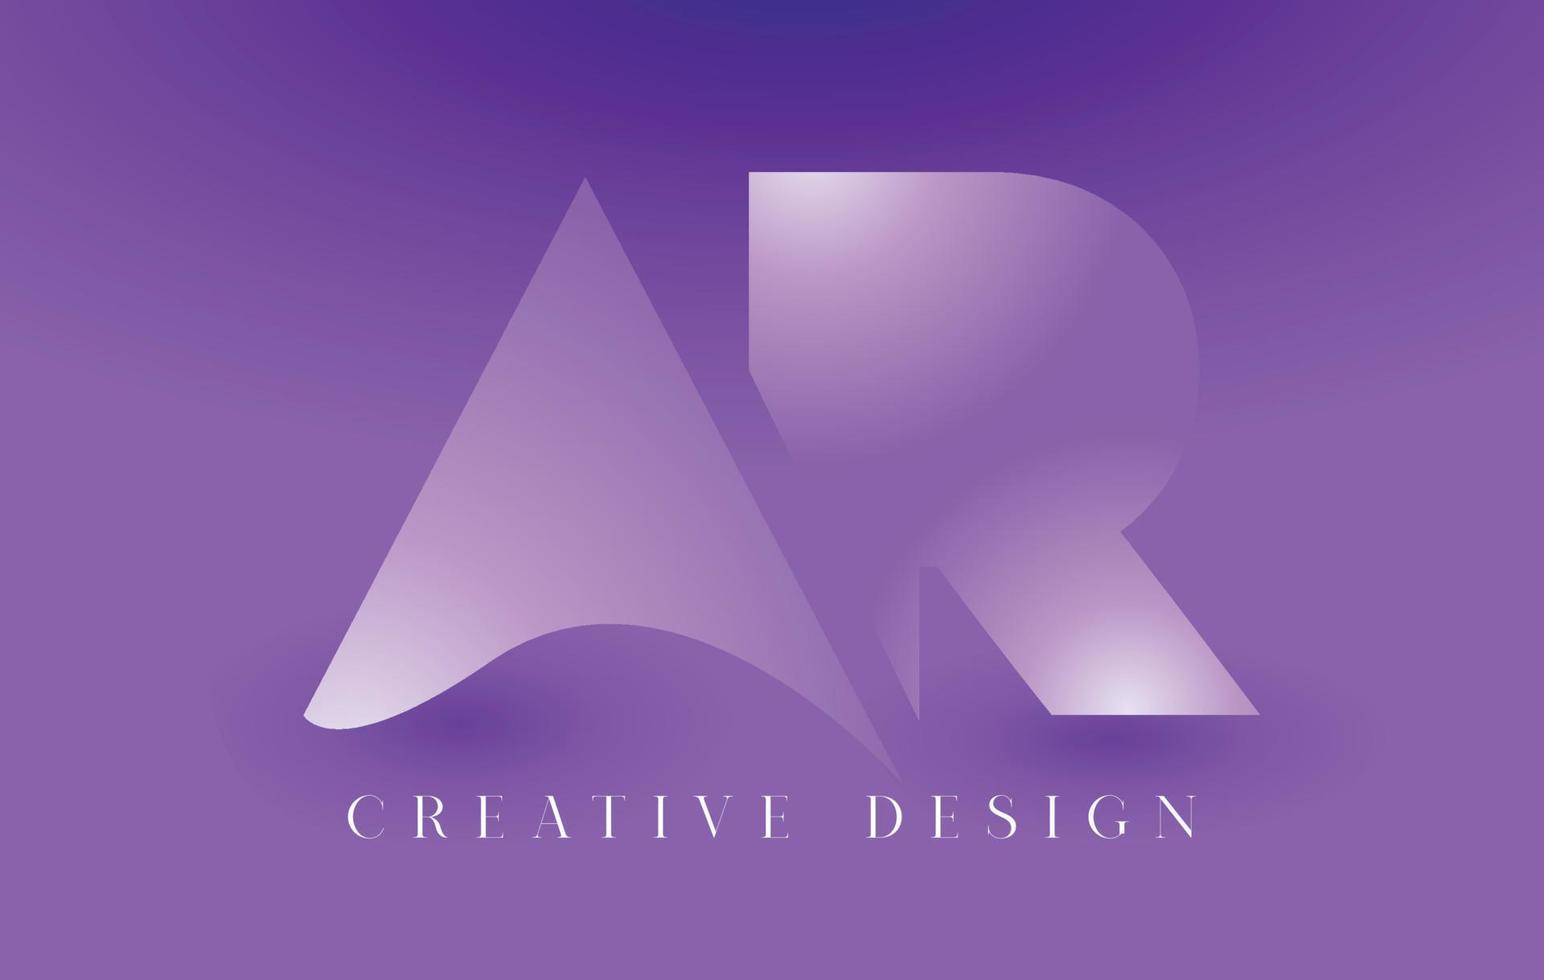 conceito de design de carta de logotipo ar com letras minimalistas abstratas em estilo moderno vetor